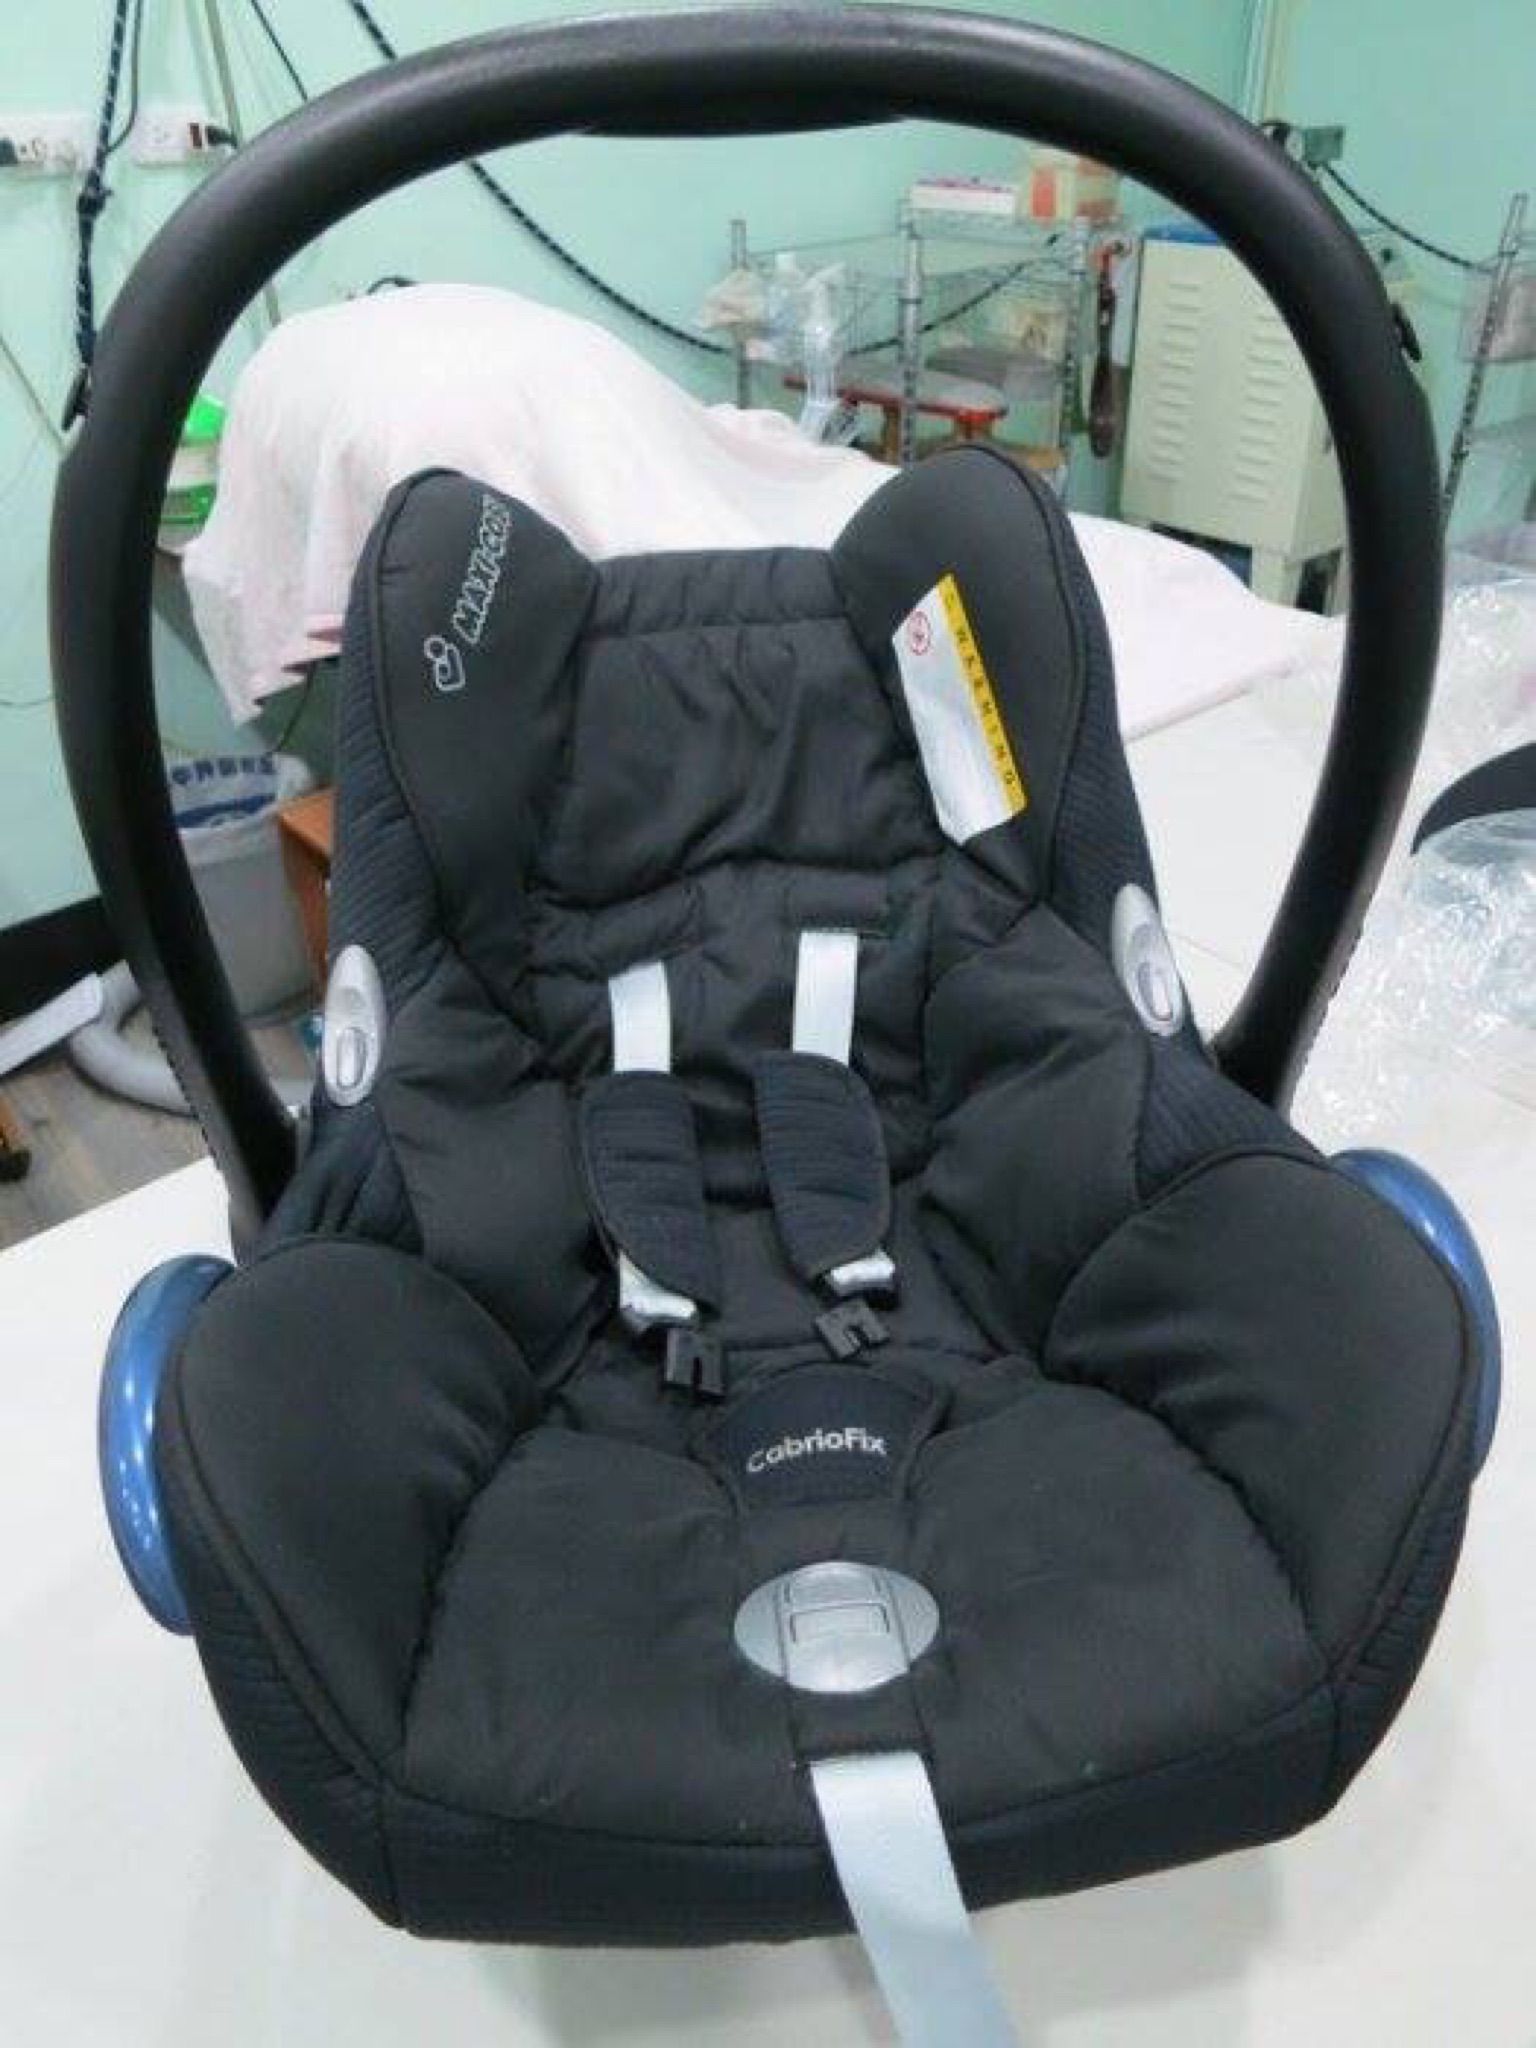 Maxi Cosi Baby car seat cabriofix 2012 嬰兒提籃/汽座提籃，加附蚊帳和傘罩